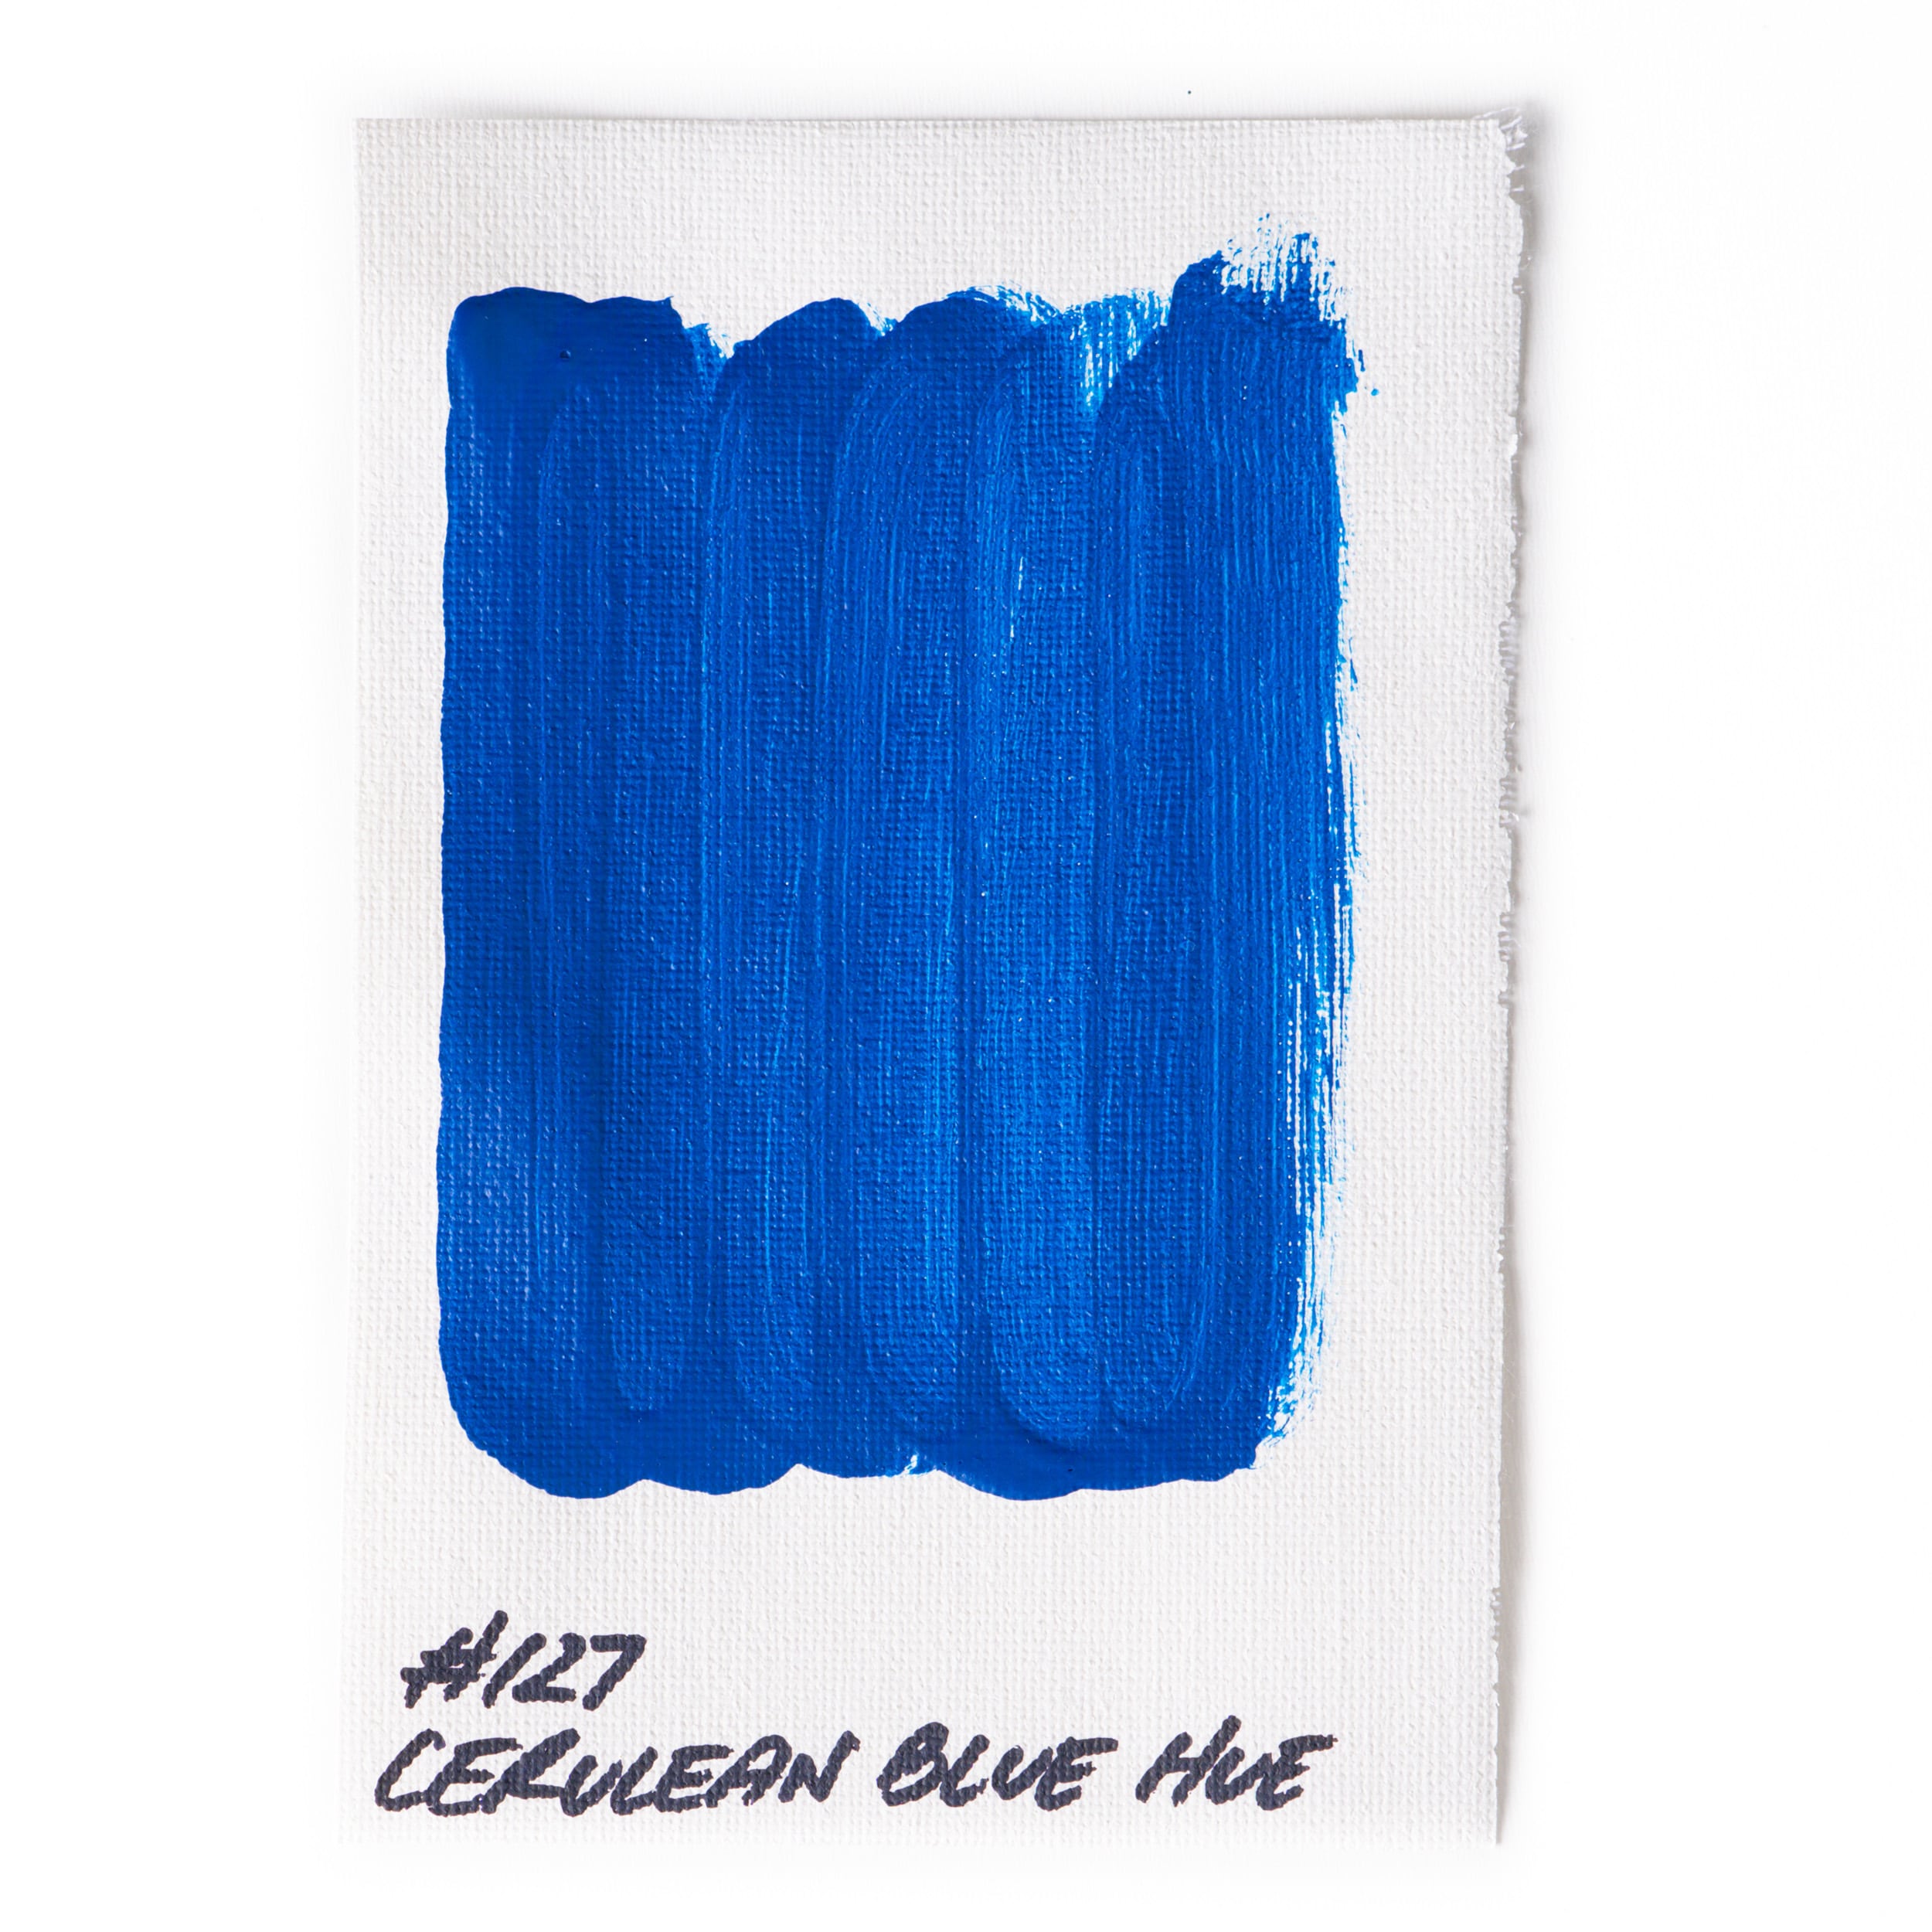 Cerulean blue